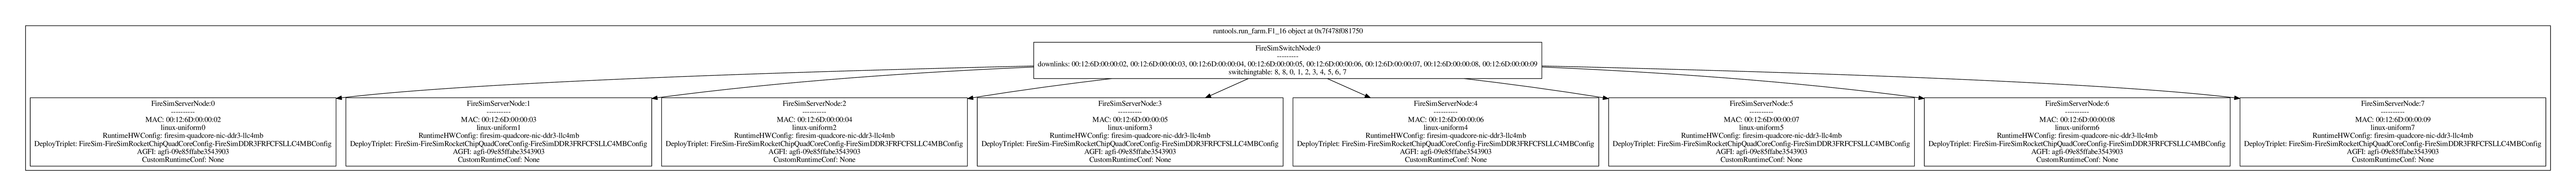 Example diagram from running ``firesim runcheck``